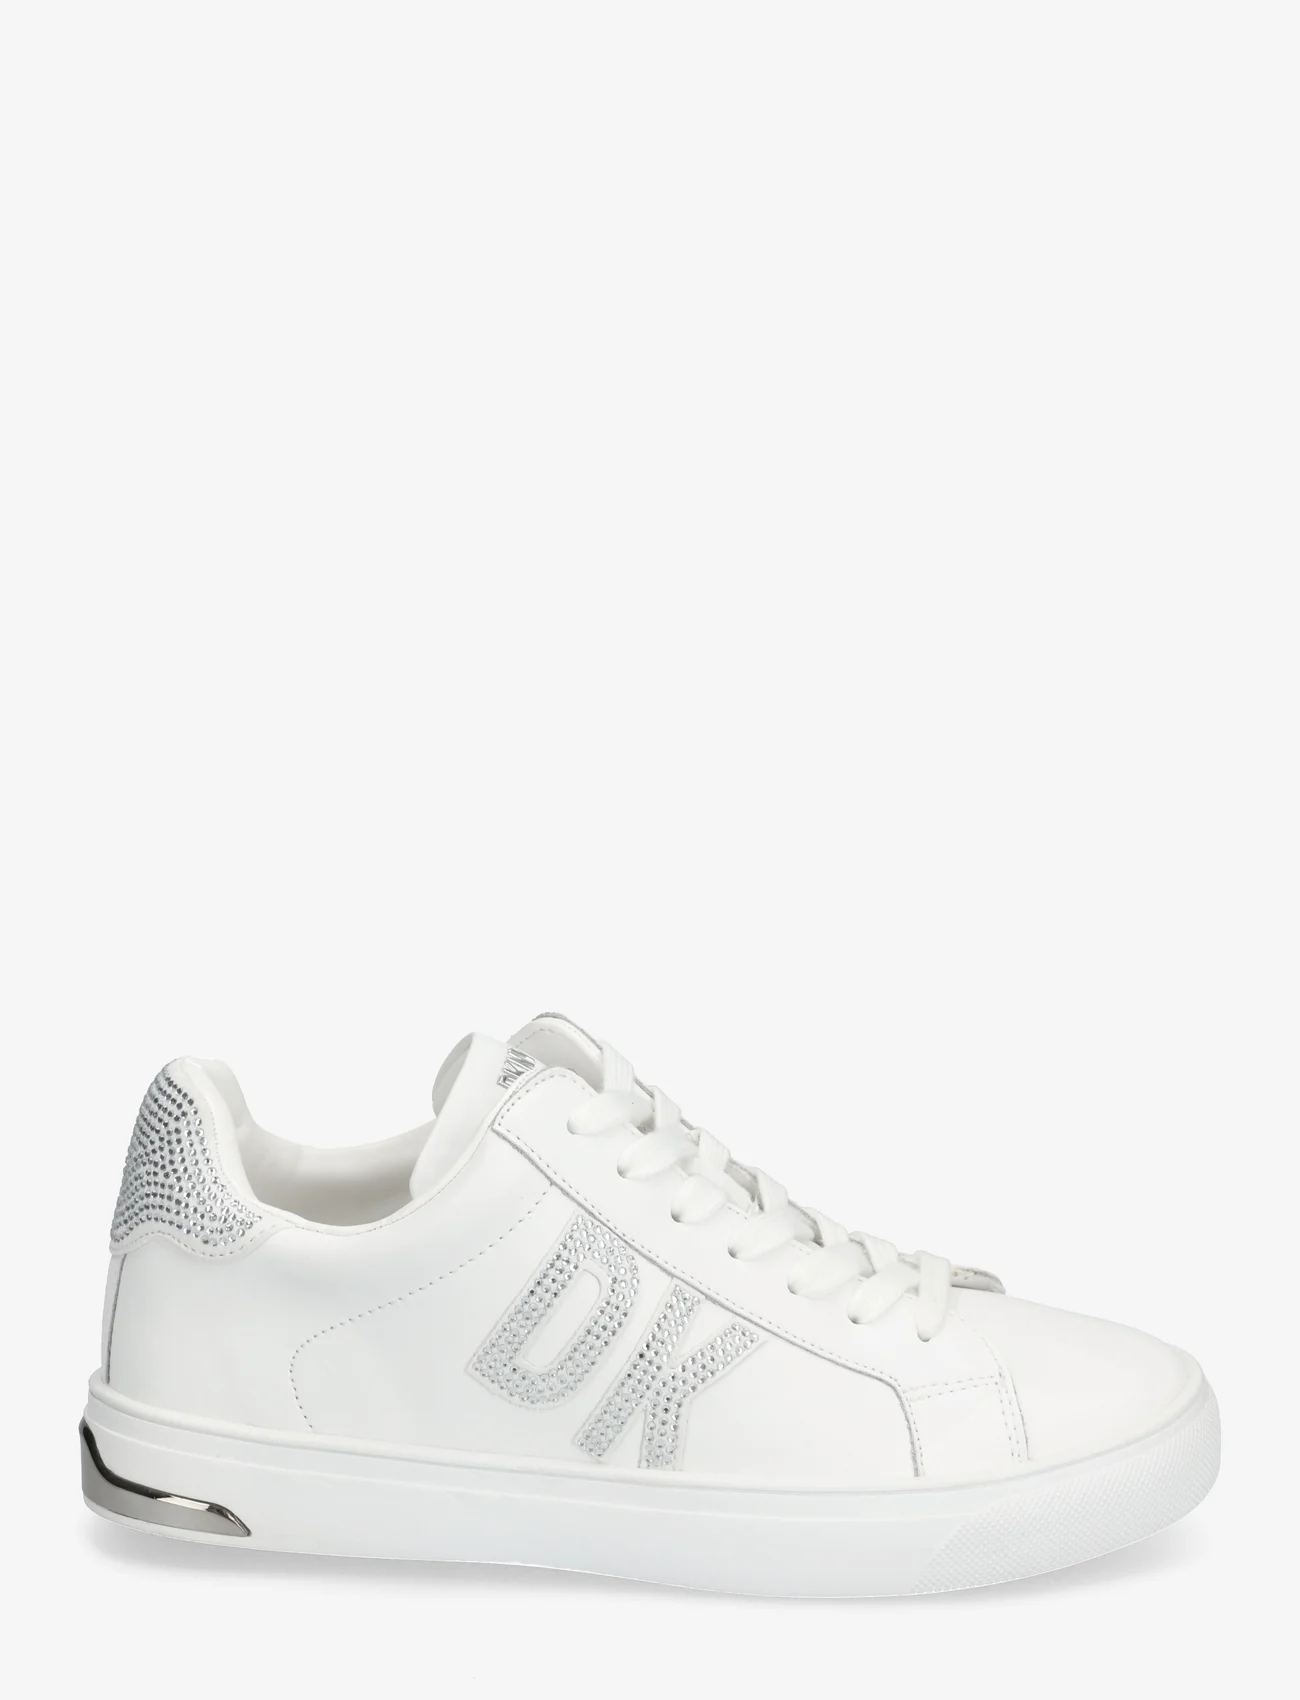 DKNY - ABENI RHINESTONE LOG - low top sneakers - 8iw - brt white - 1